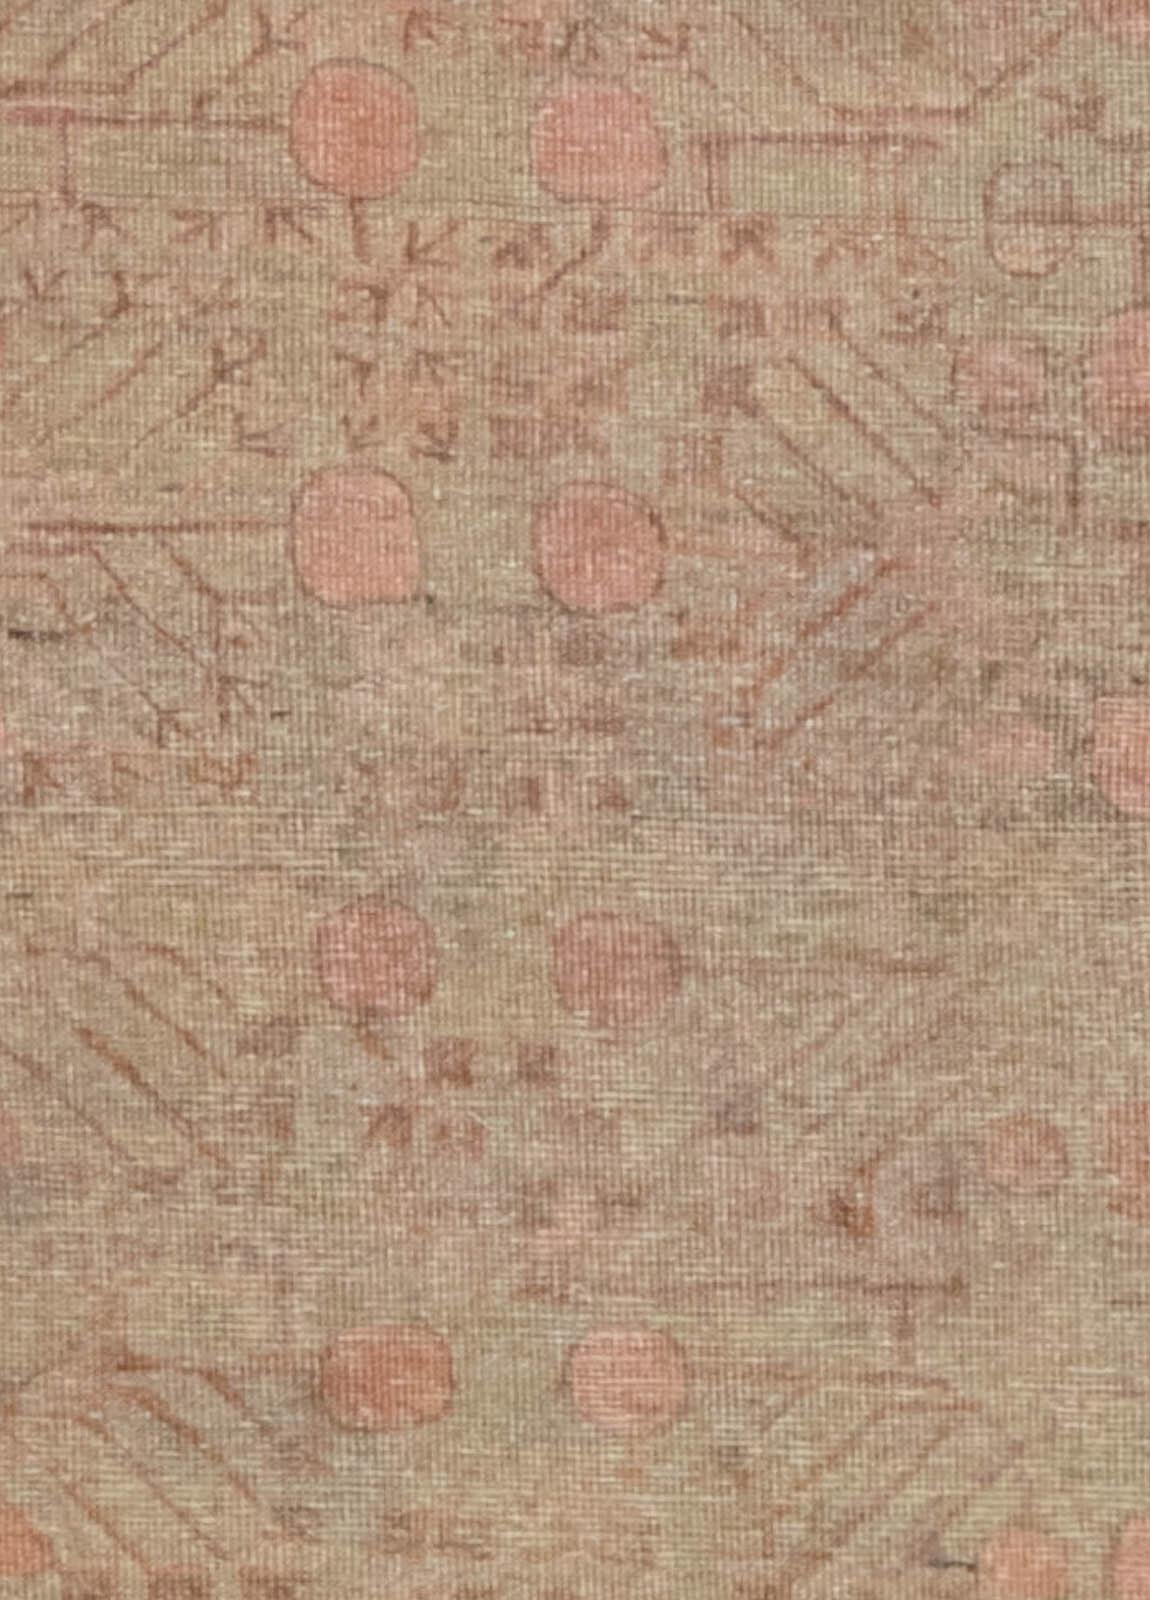 Midcentury Samarkand handmade wool rug.
Size: 6'8